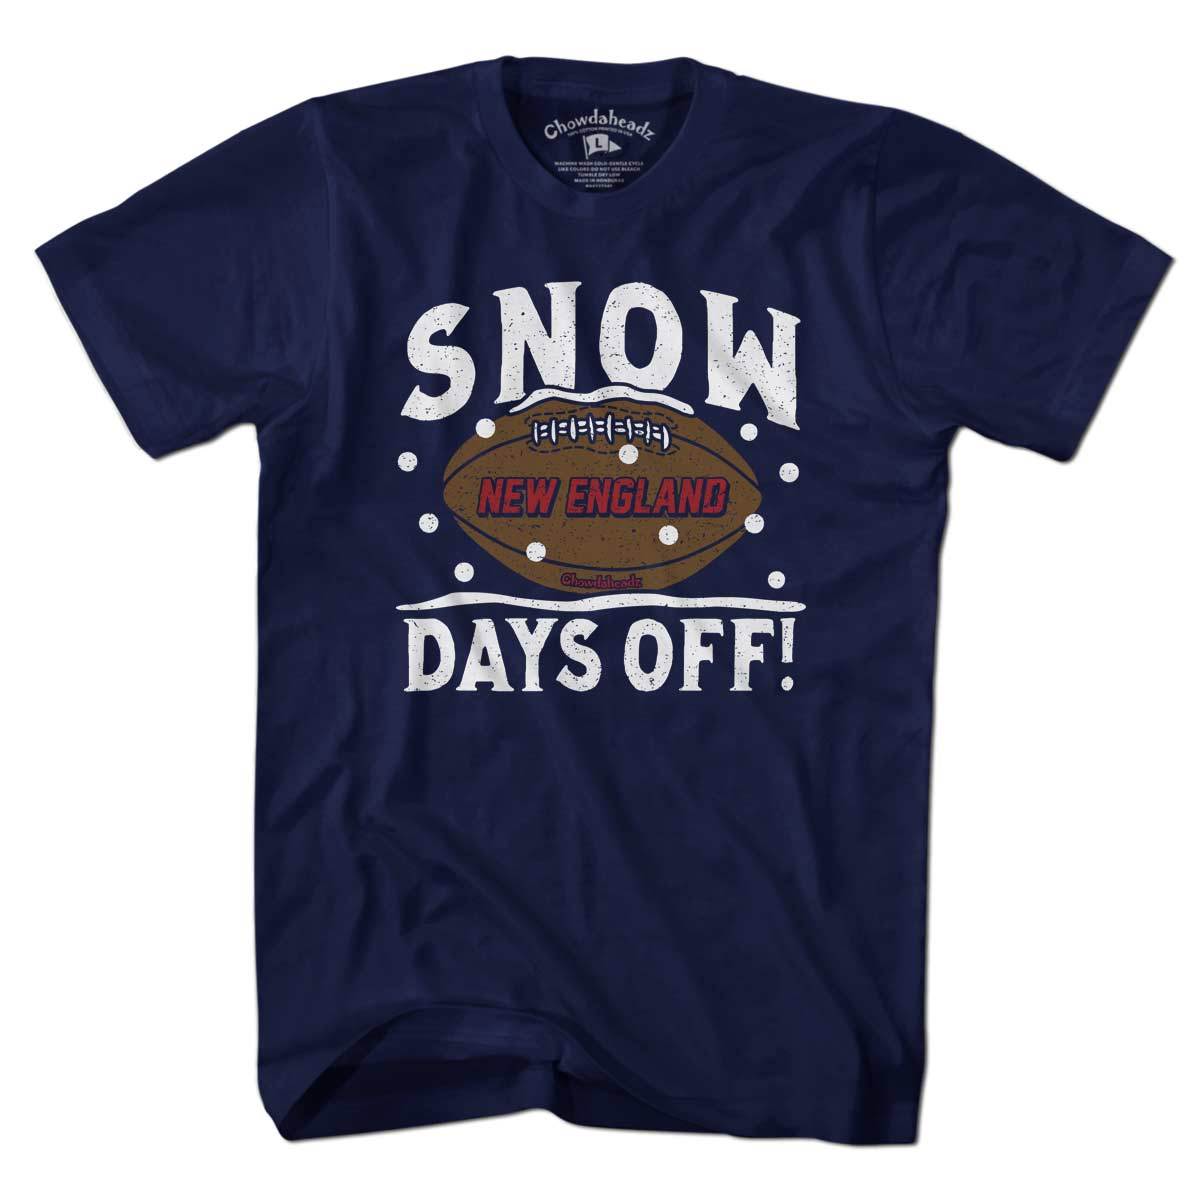 Snow Days Off T-Shirt - Chowdaheadz